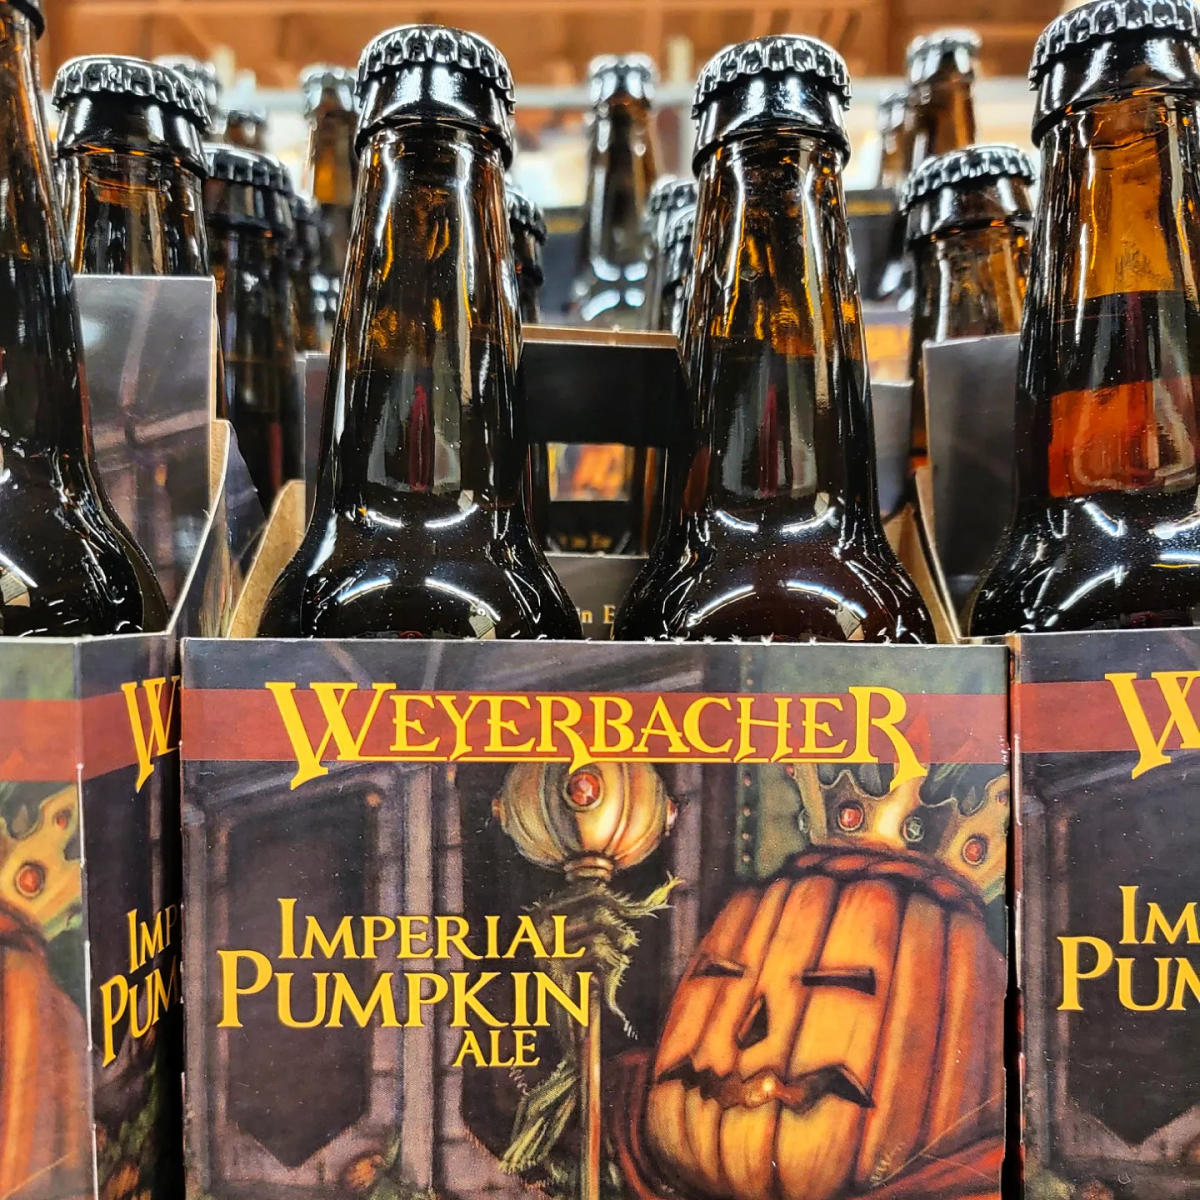 Bottles of Weyerbacher Brewing's Imperial Pumpkin Ale